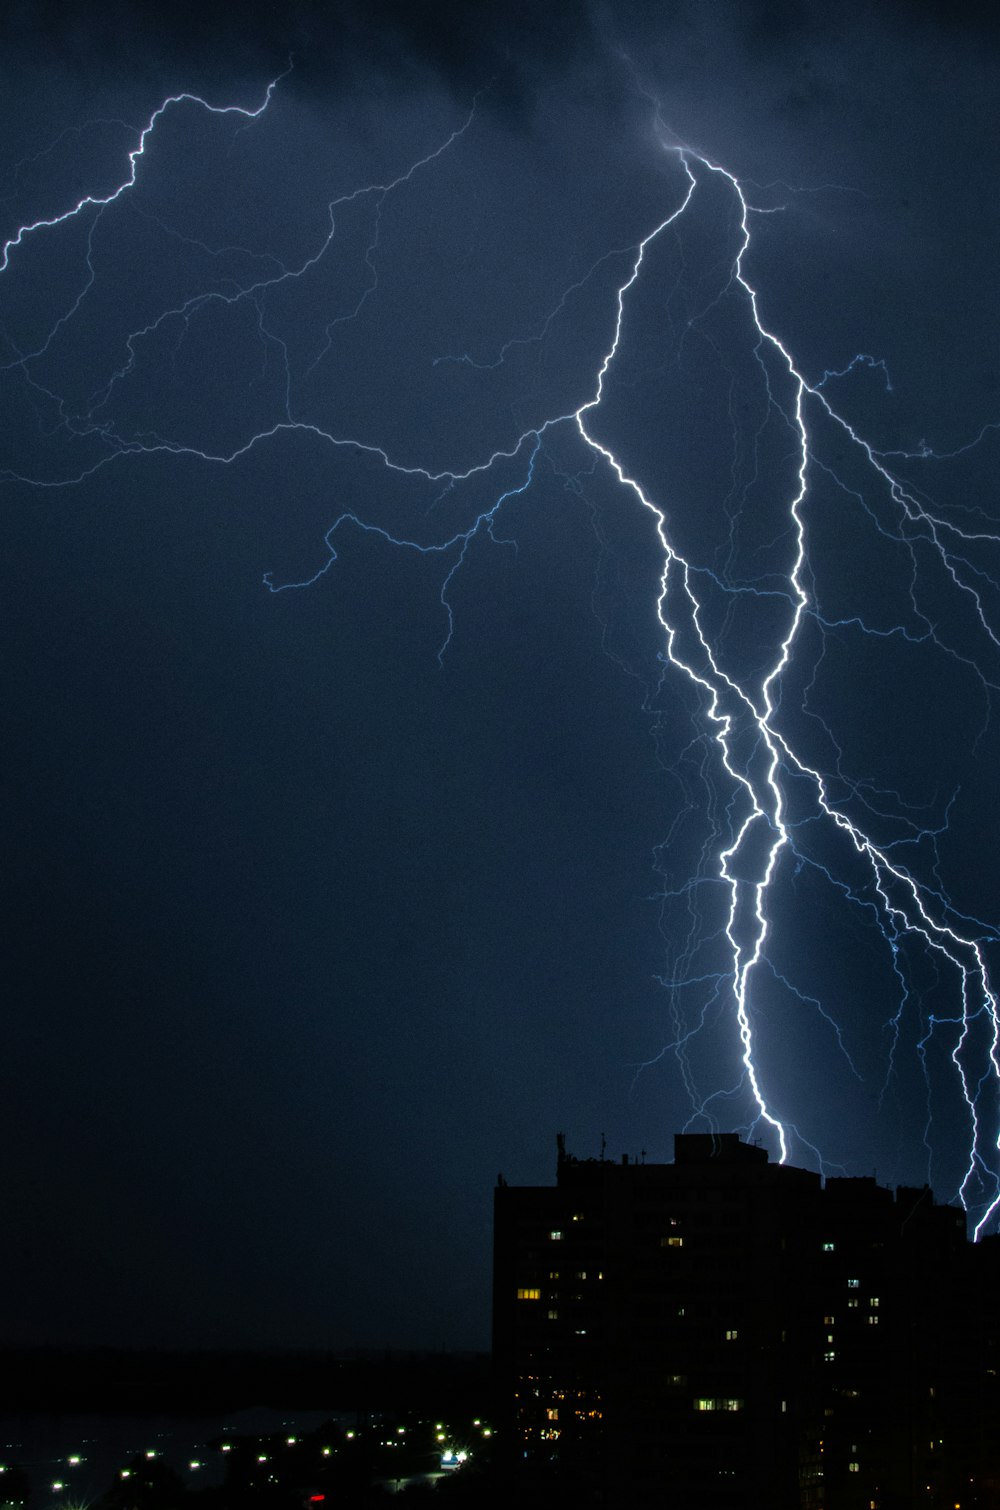 a lightning bolt strikes over a city at night